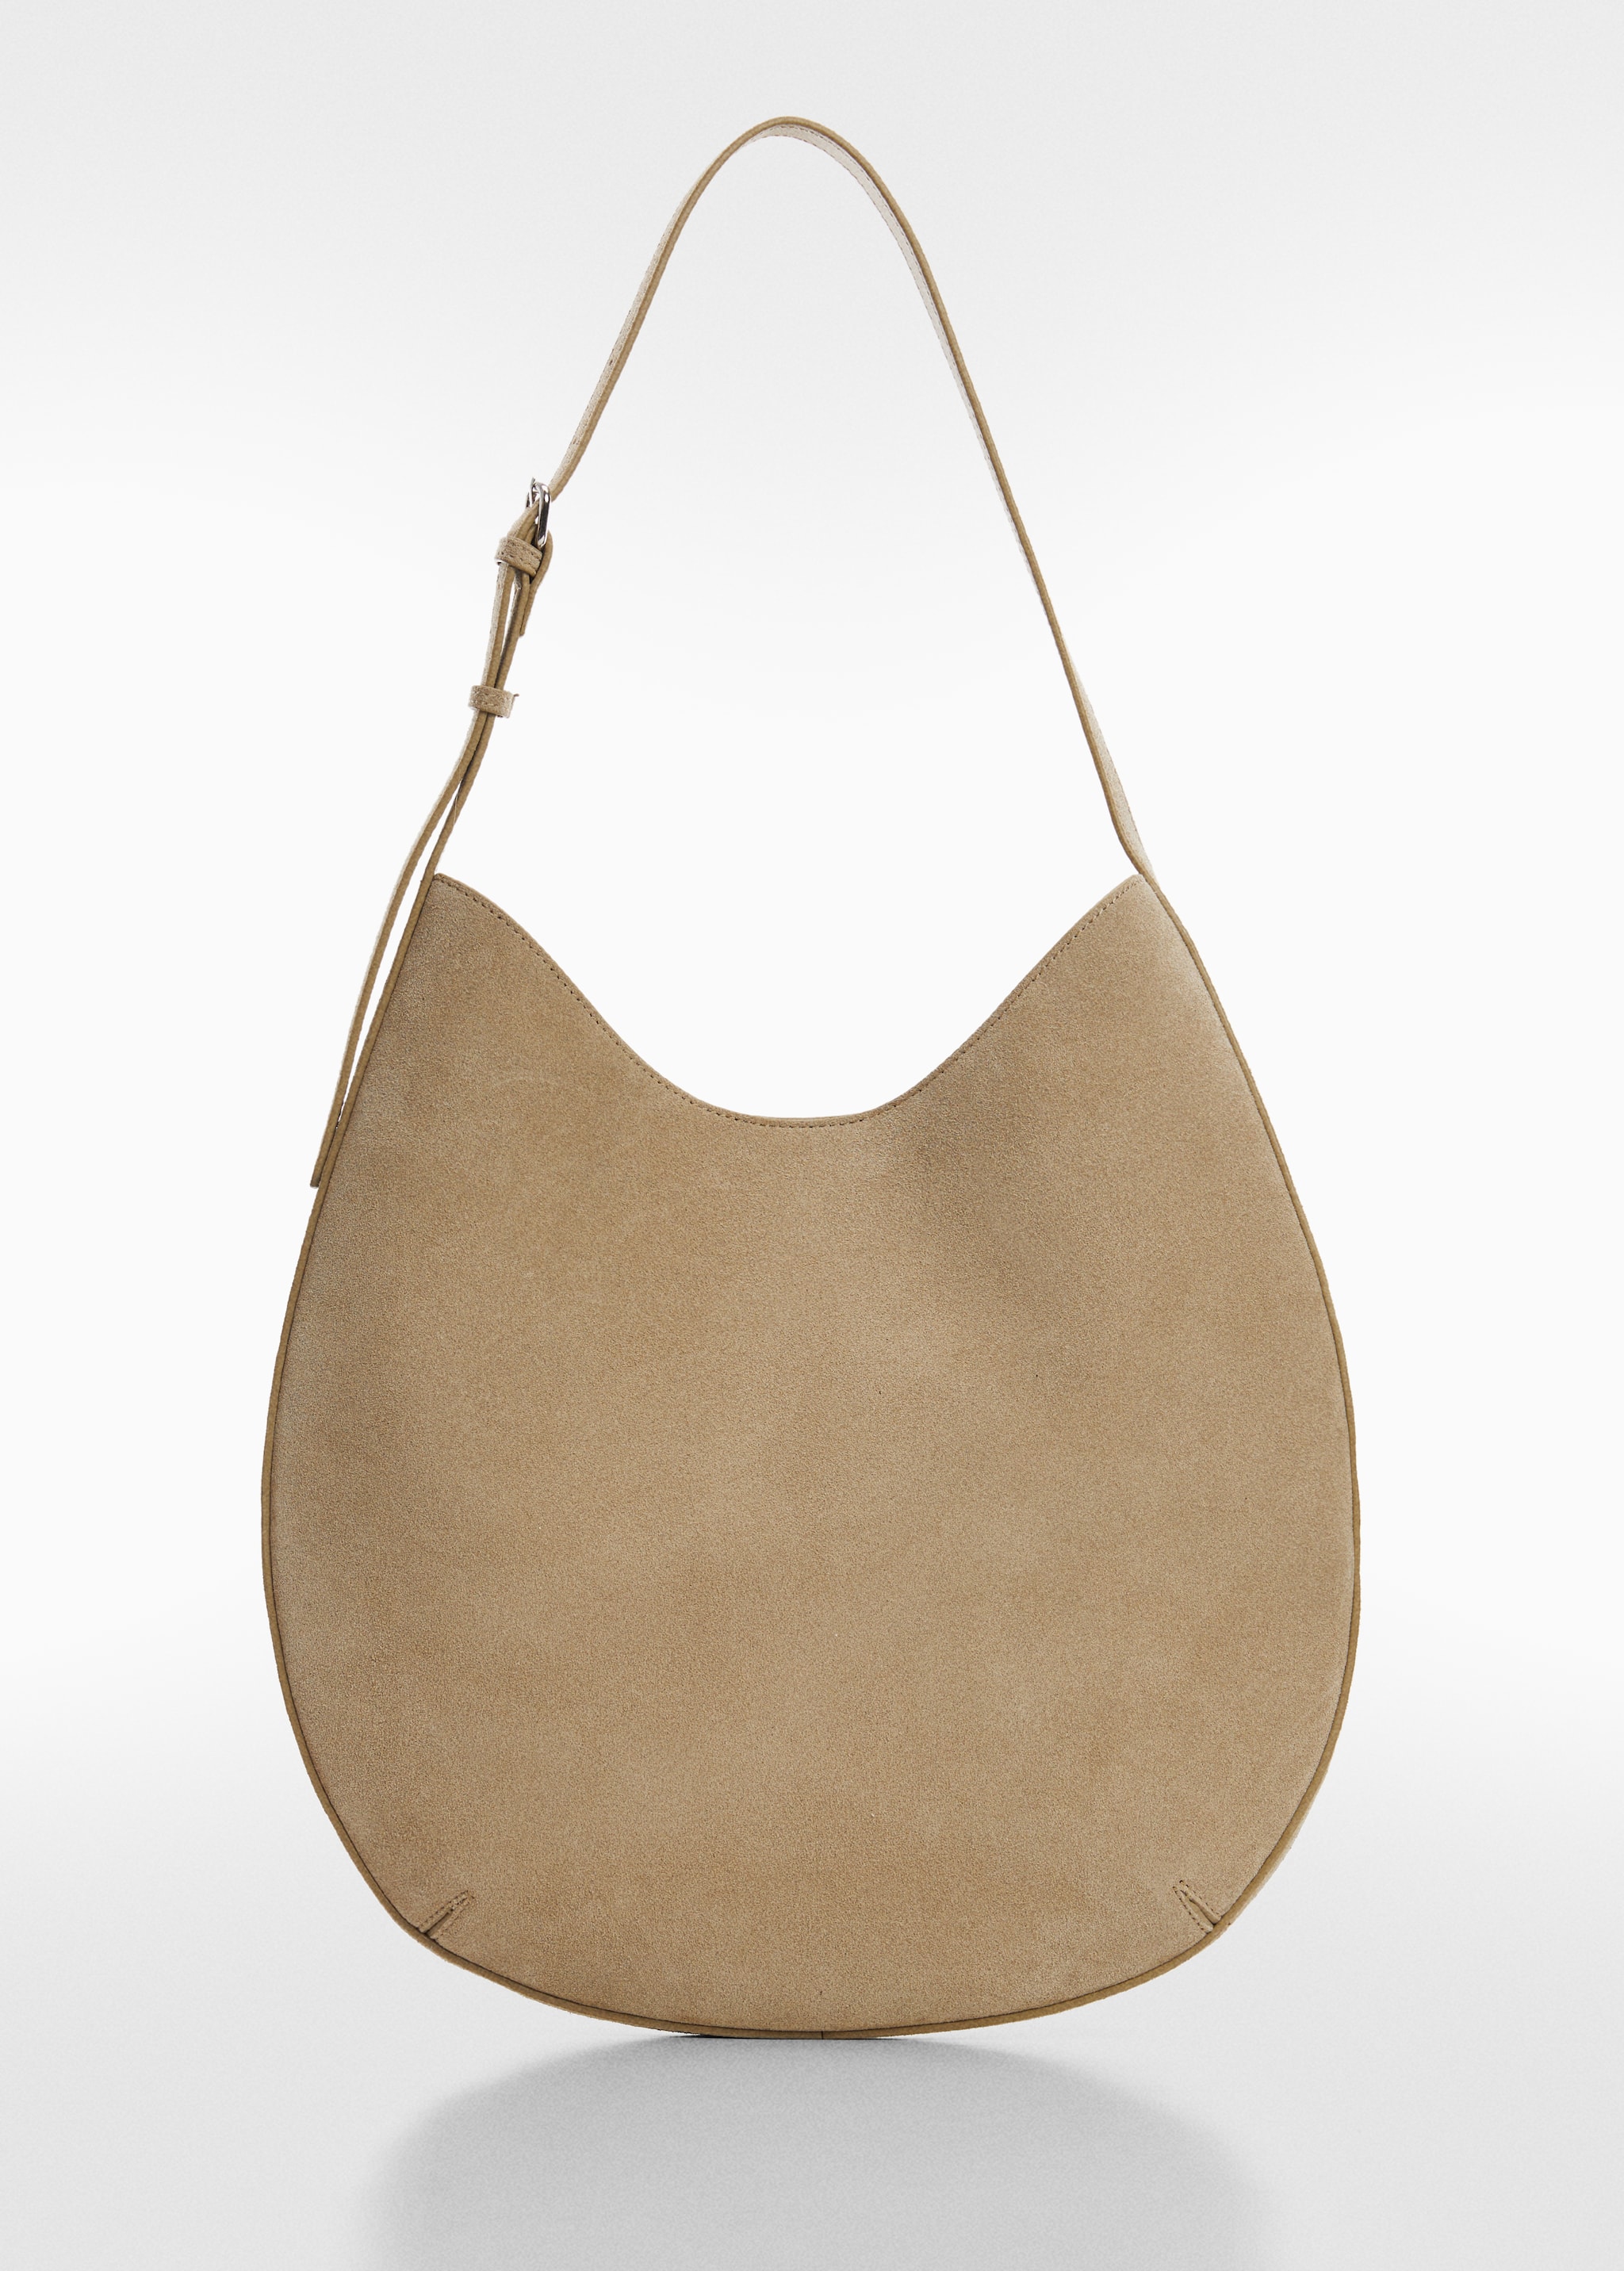 Leather shoulder bag - Article without model